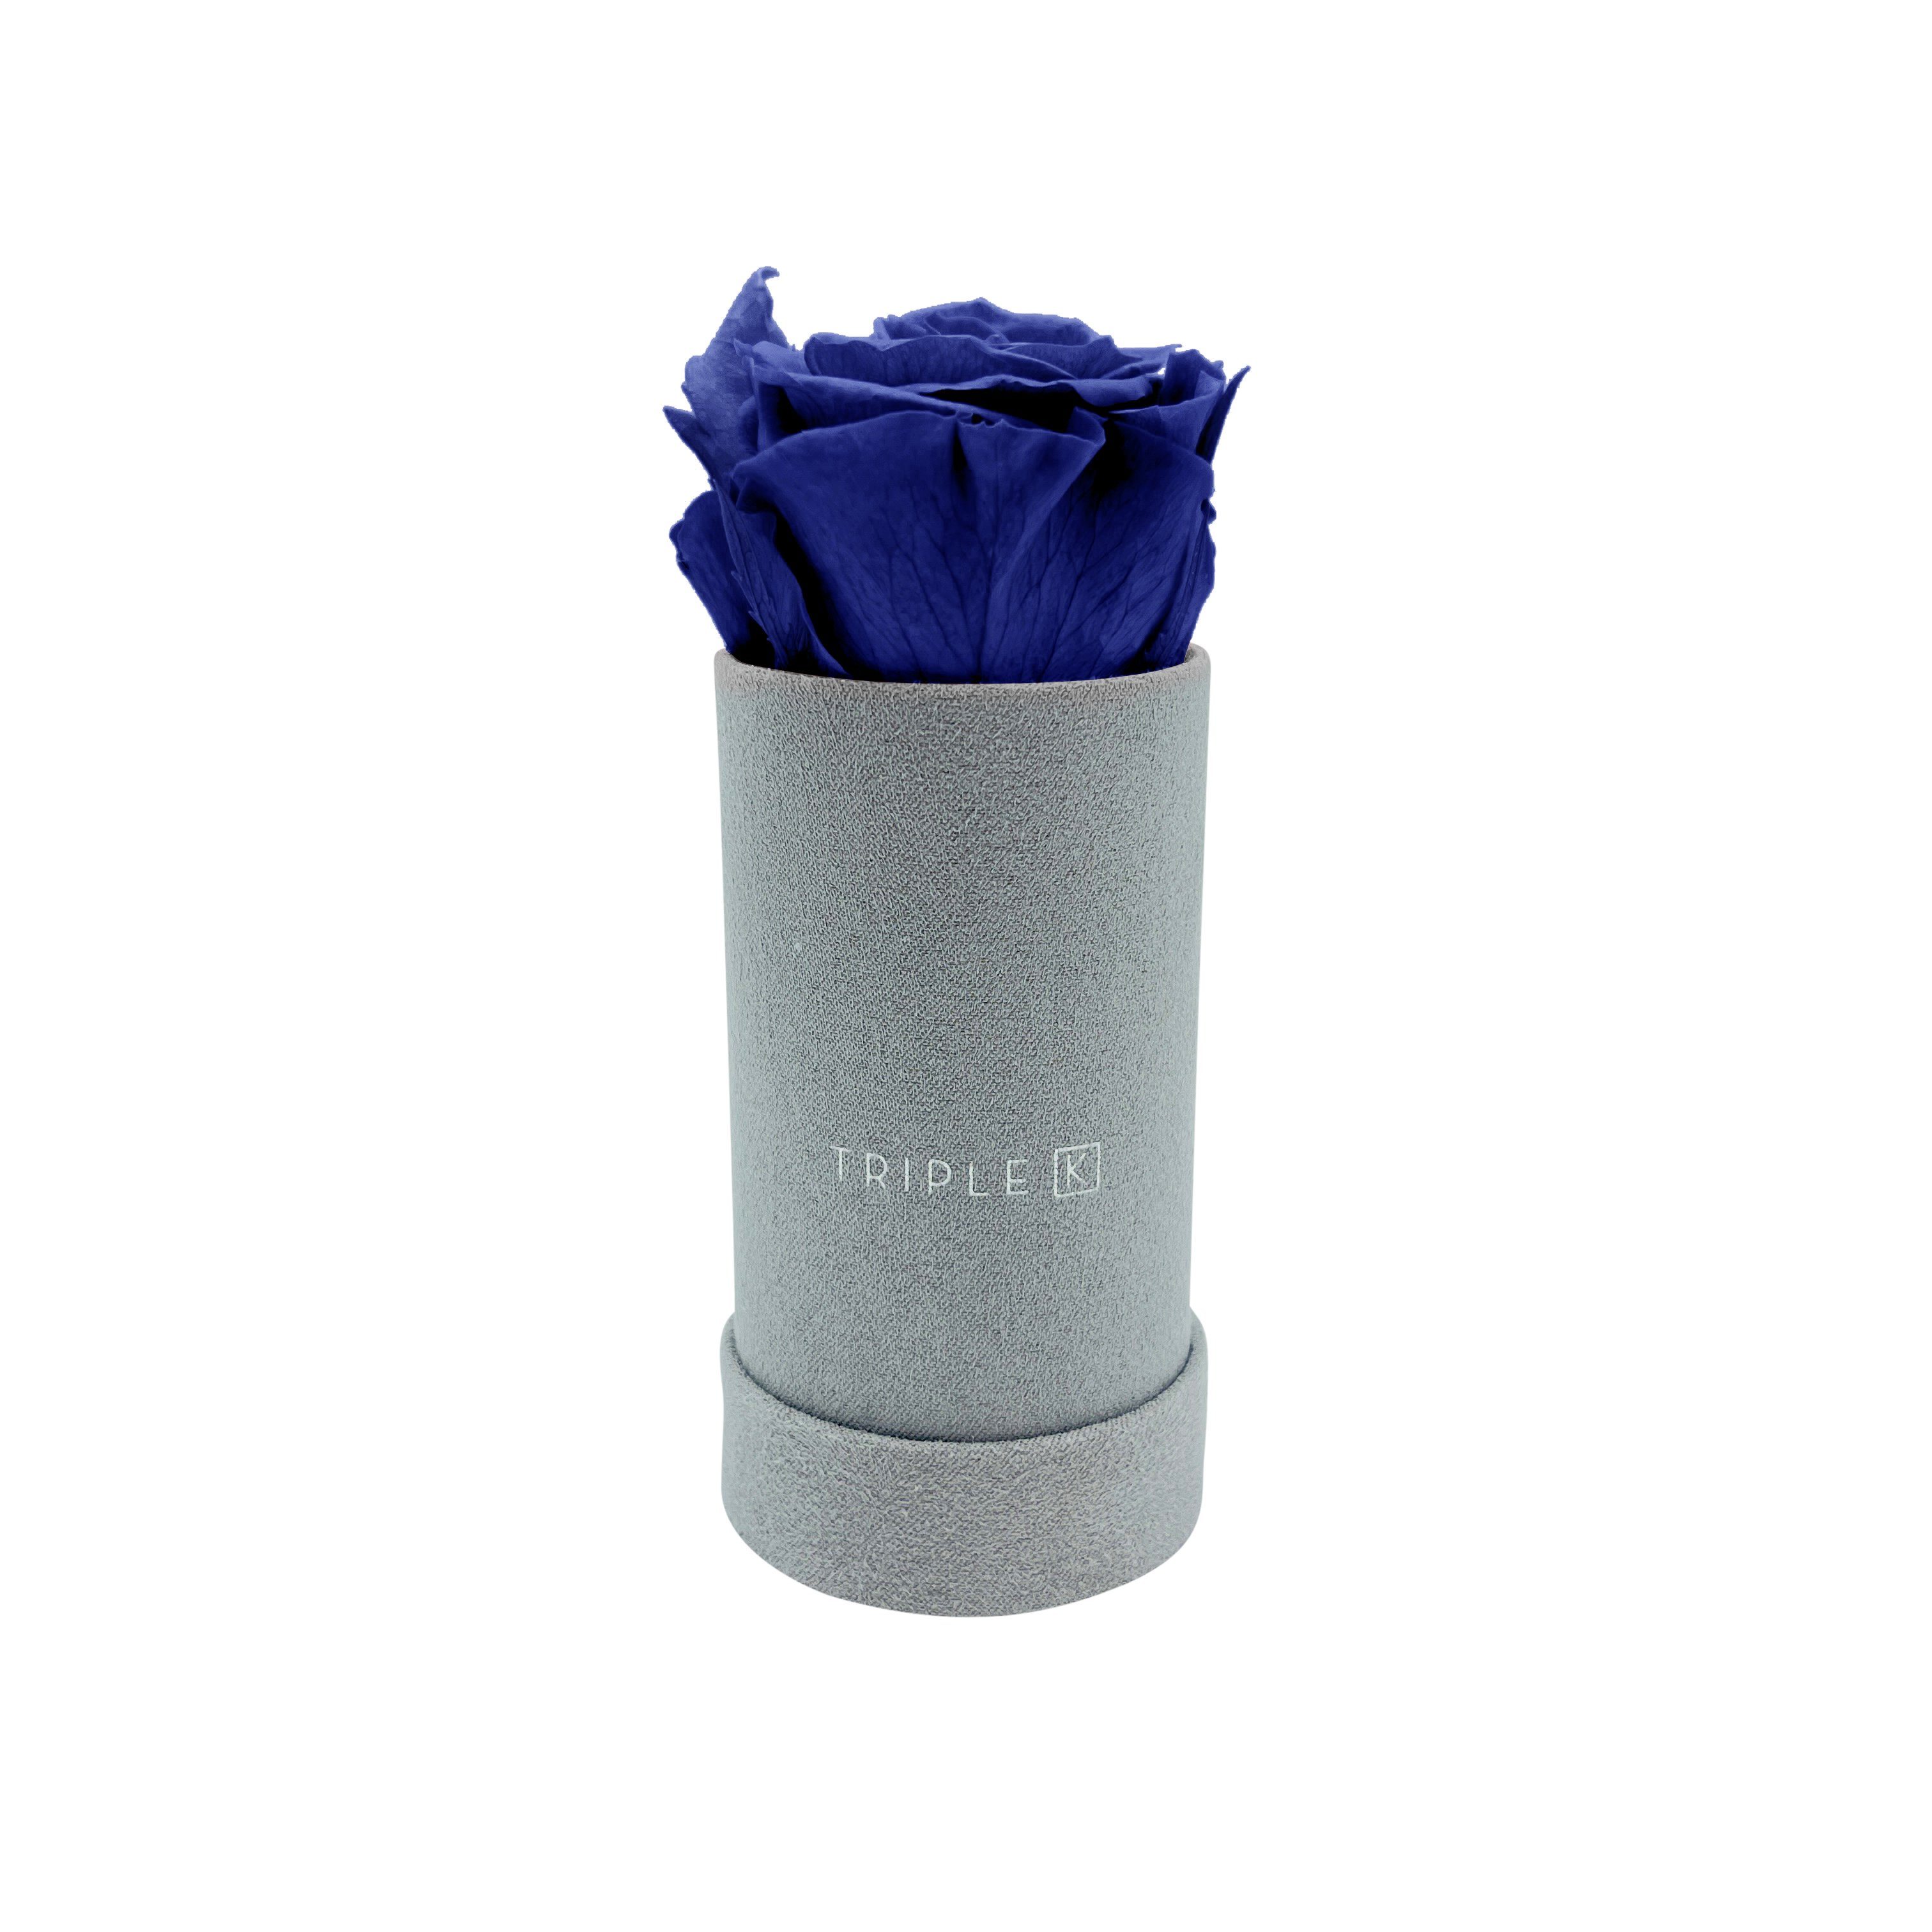 Kunstblume TRIPLE K - Rosenbox Velvet mit Infinity Rosen, bis 3 Jahre Haltbar, Flowerbox mit konservierten Rosen, Blumenbox Inkl. Grußkarte Infinity Rose, TRIPLE K Blau